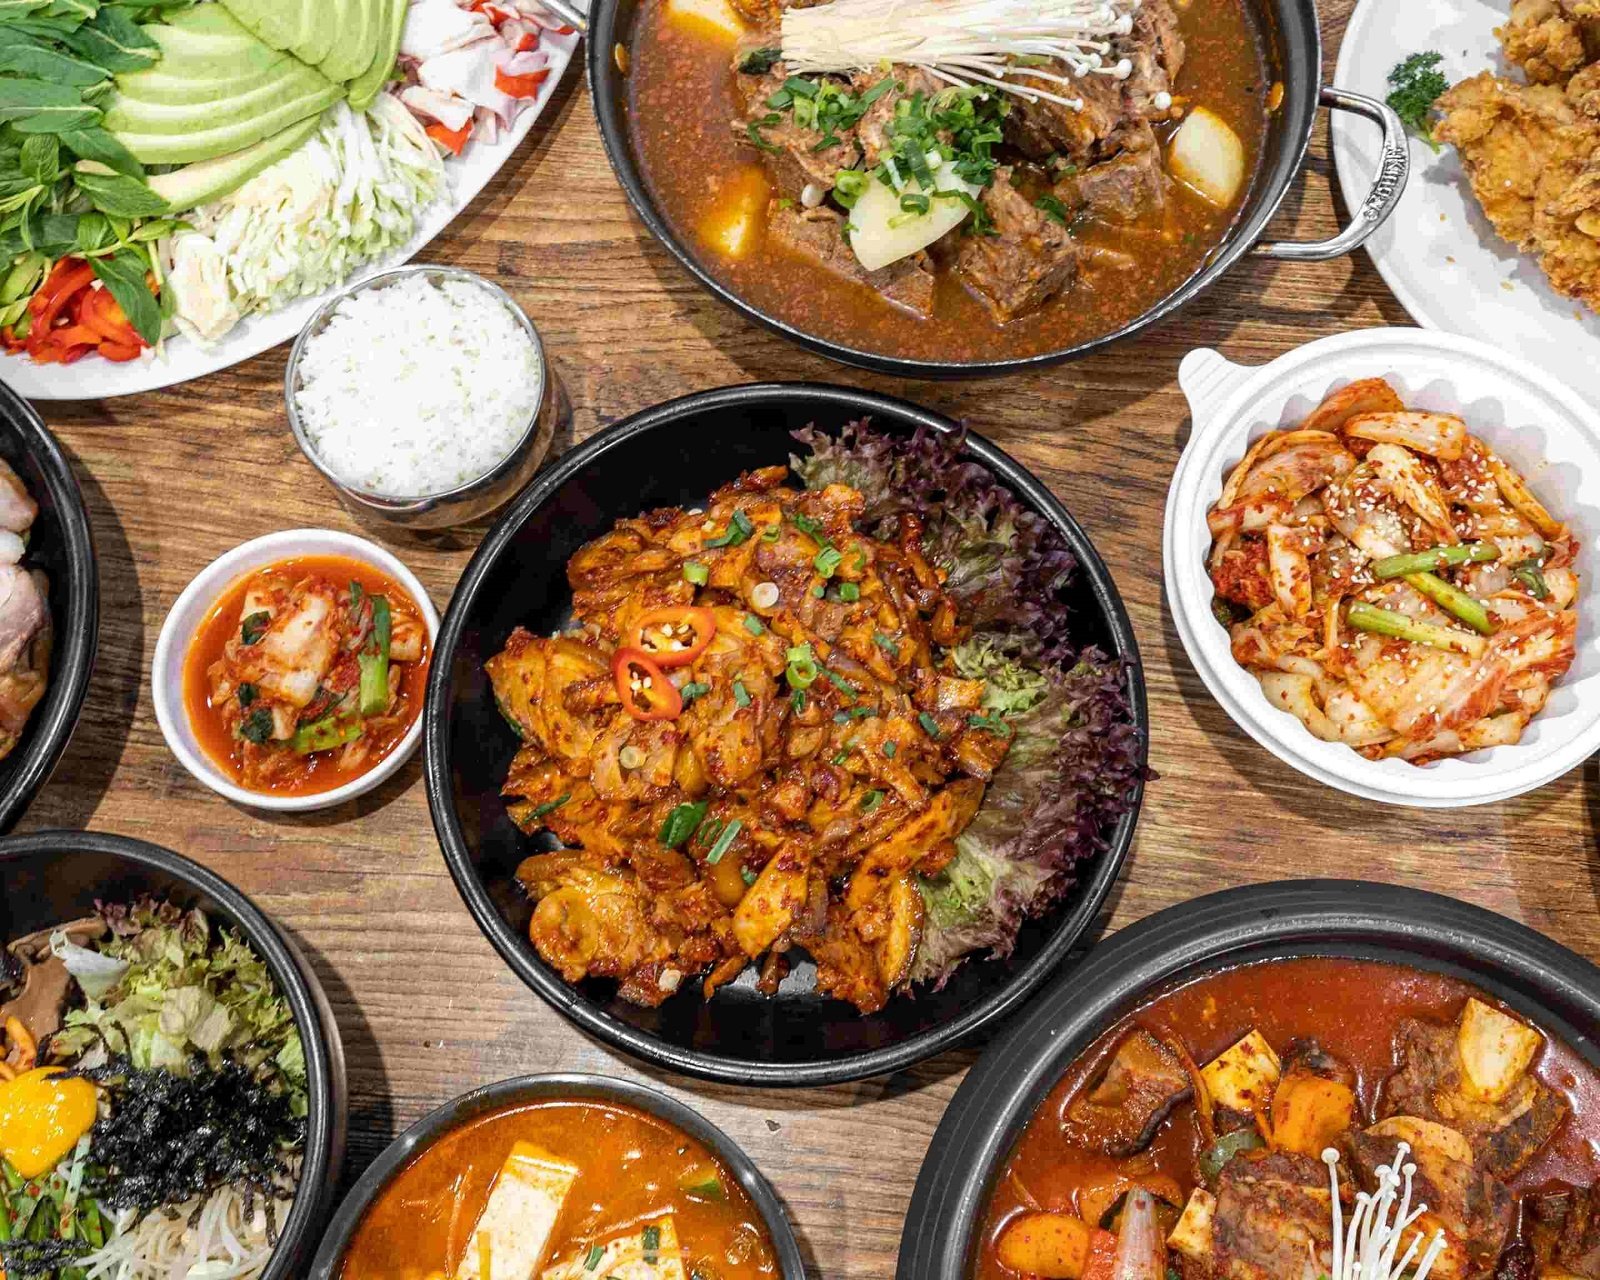 For many, Pu Ji Mi is the best Korean restaurant in Sydney.